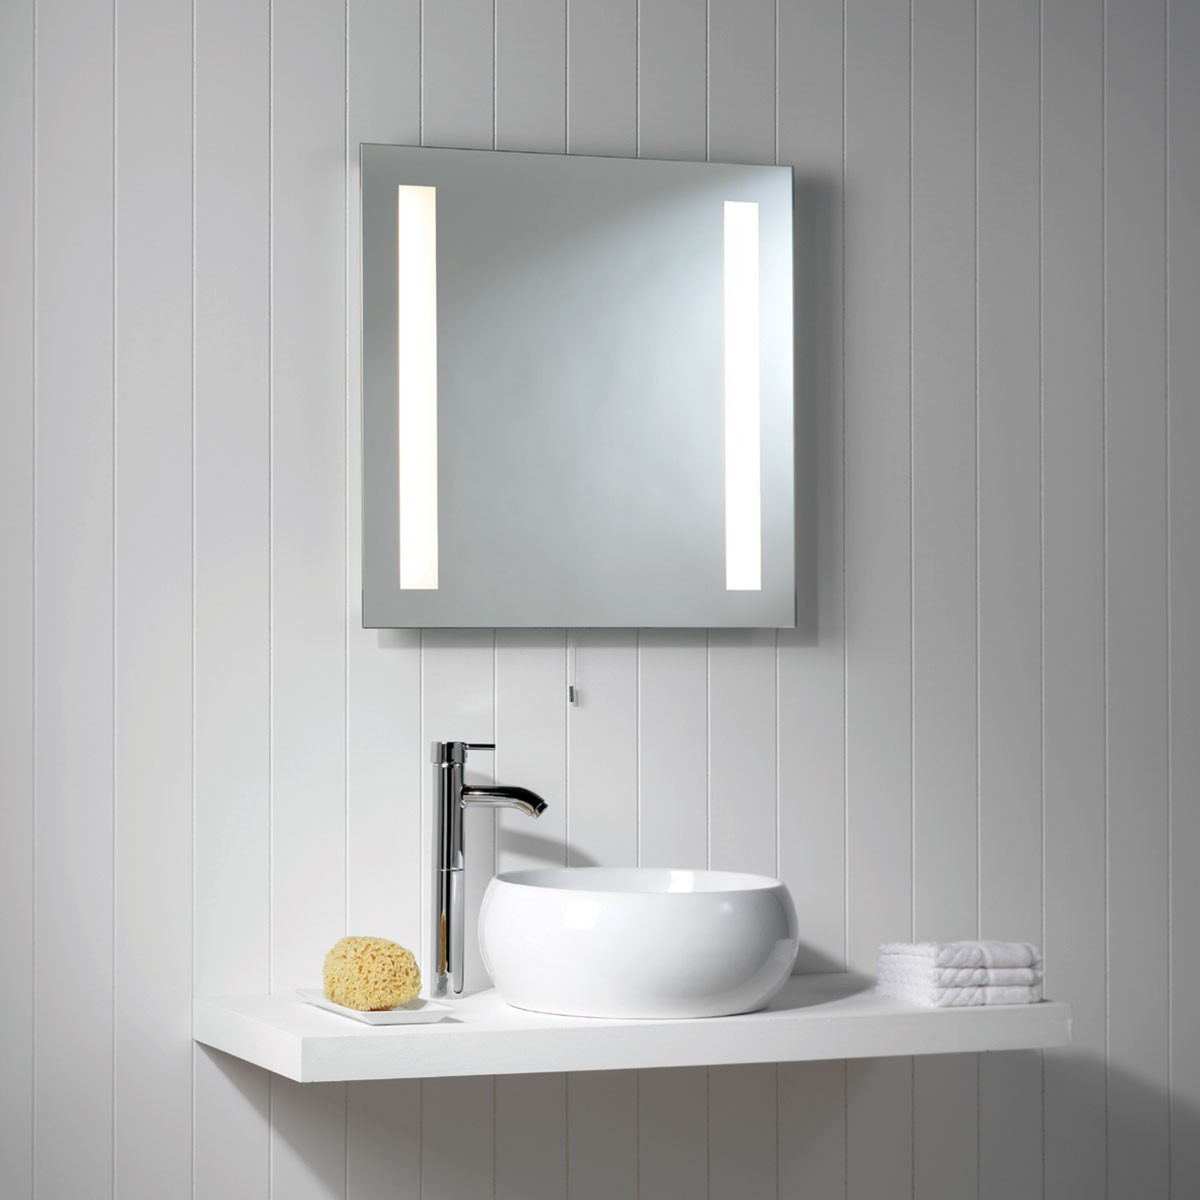 Bathroom Mirror Light
 Astro Galaxy Bathroom Mirror Light at UK Electrical Supplies